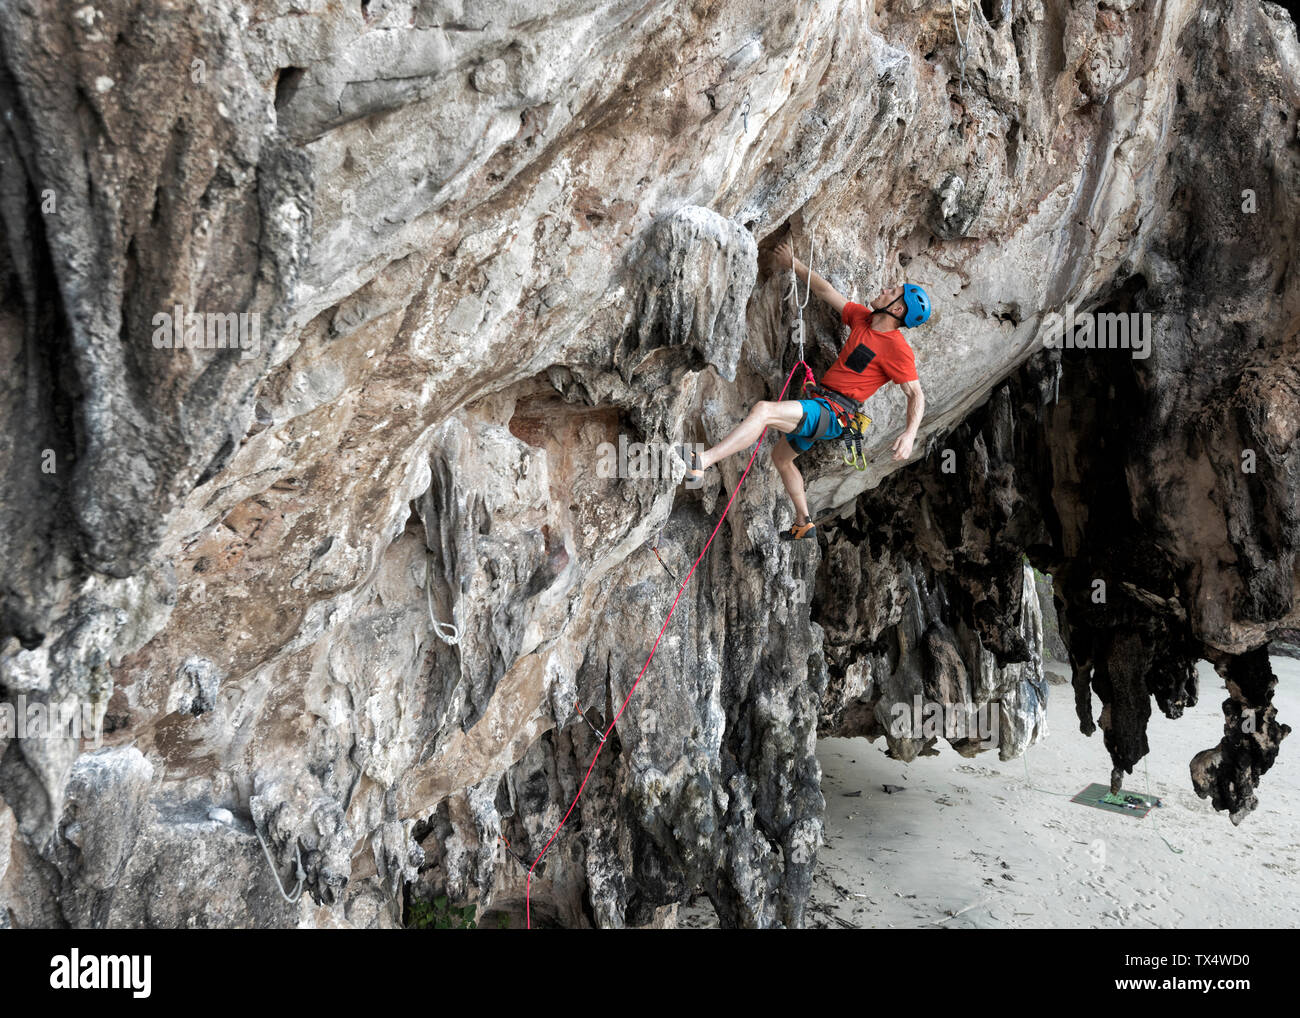 Thailand, Krabi, Lao liang island, climber in rock wall Stock Photo